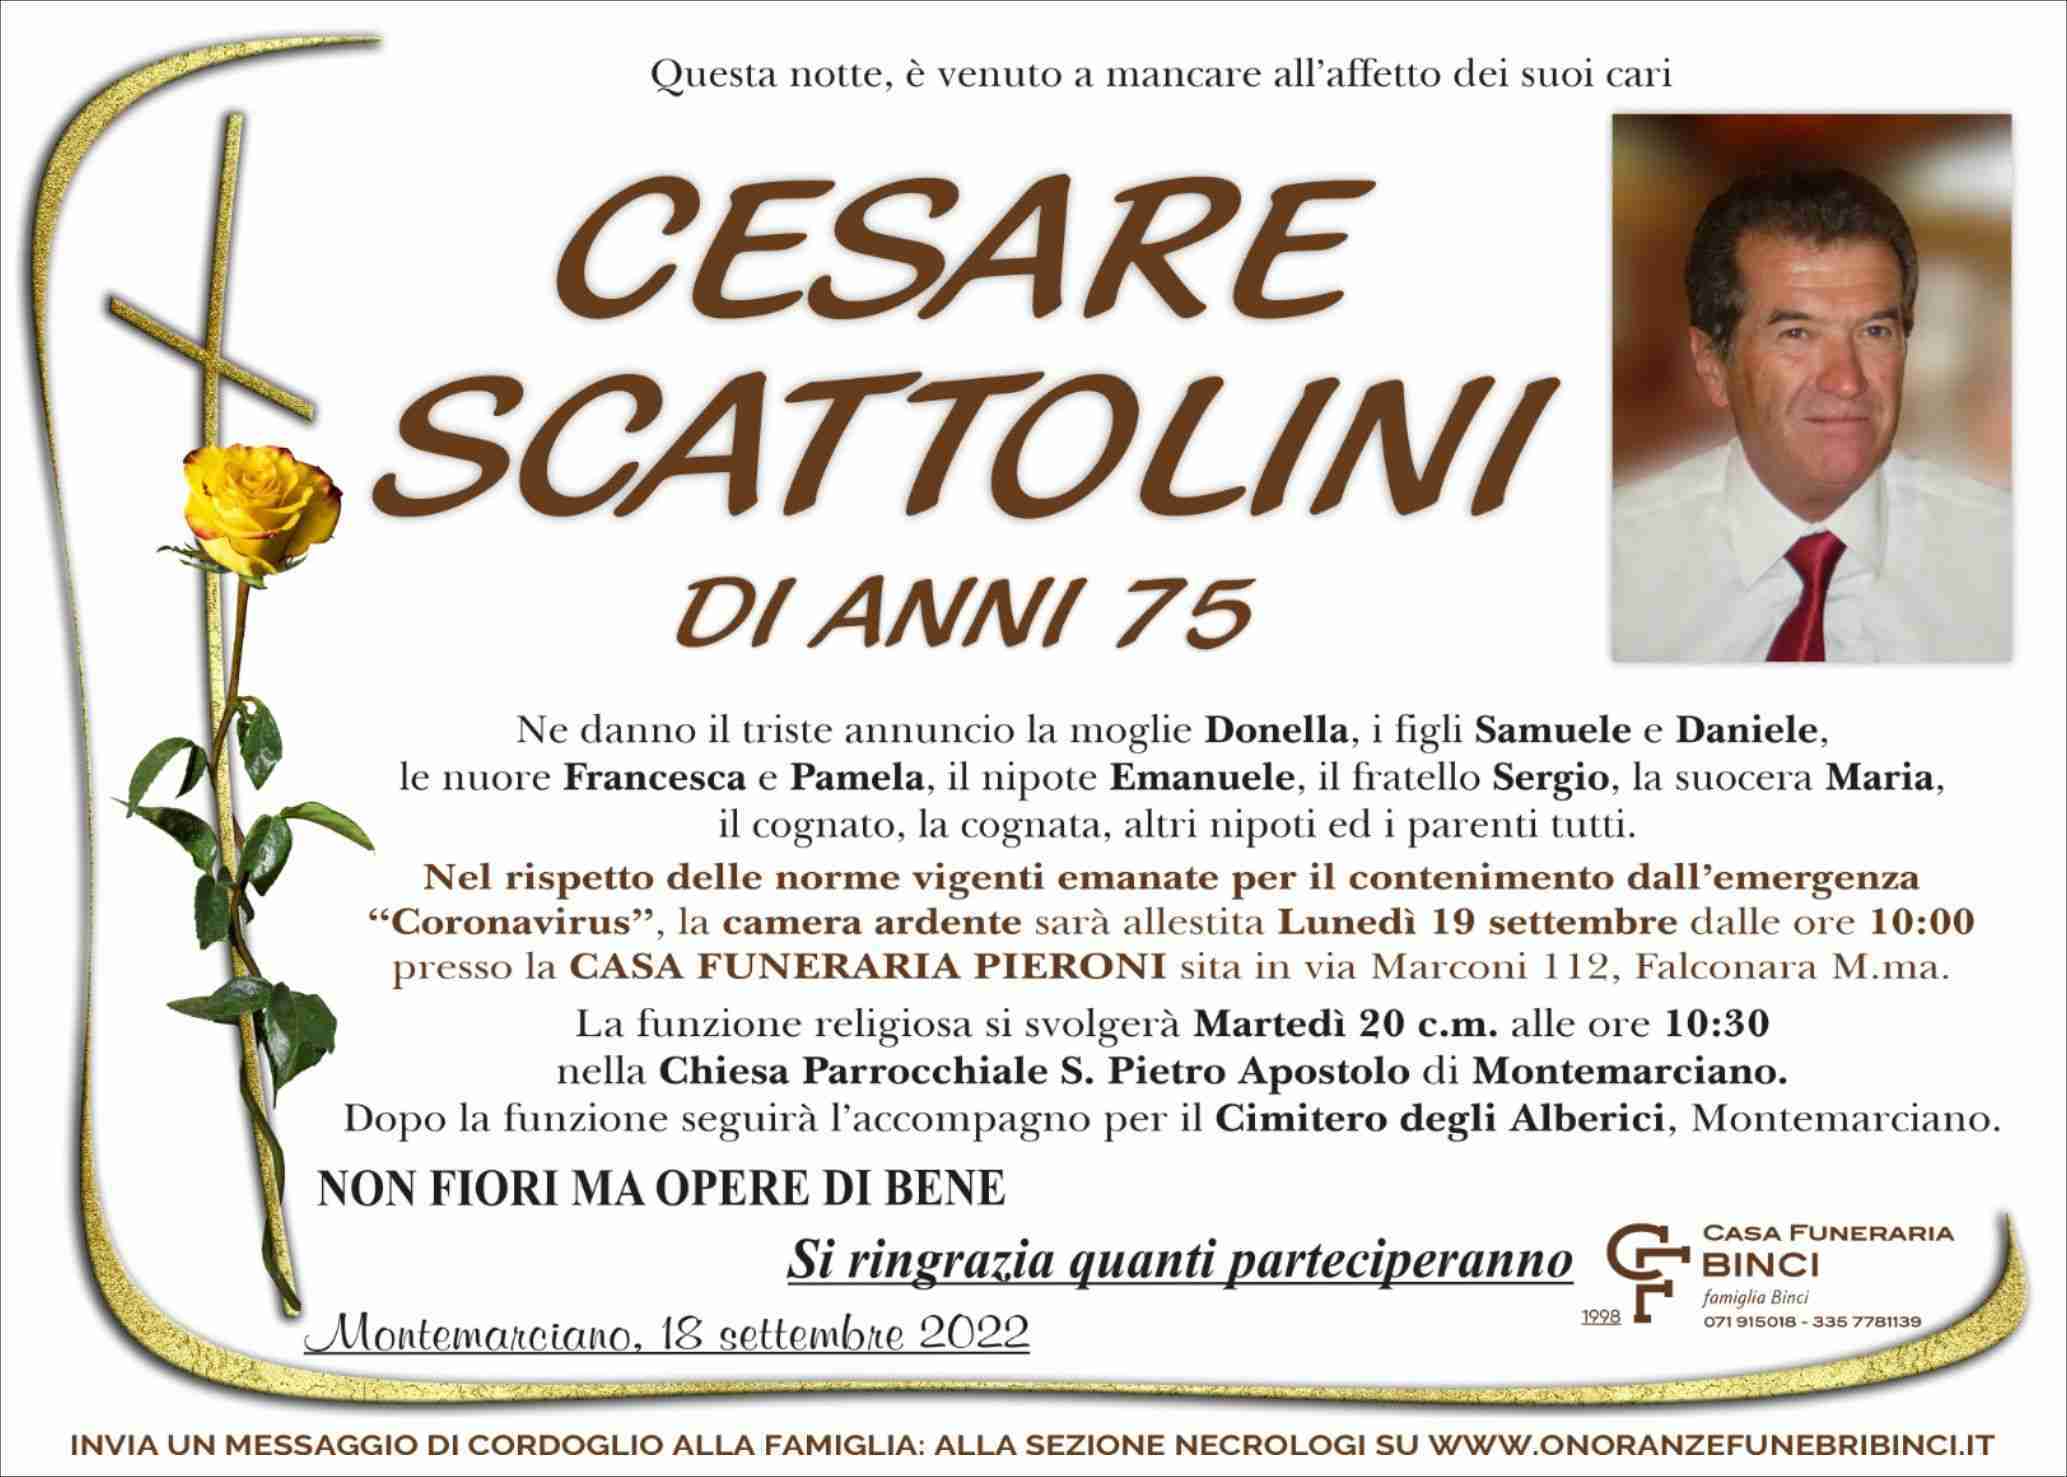 Cesare Scattolini